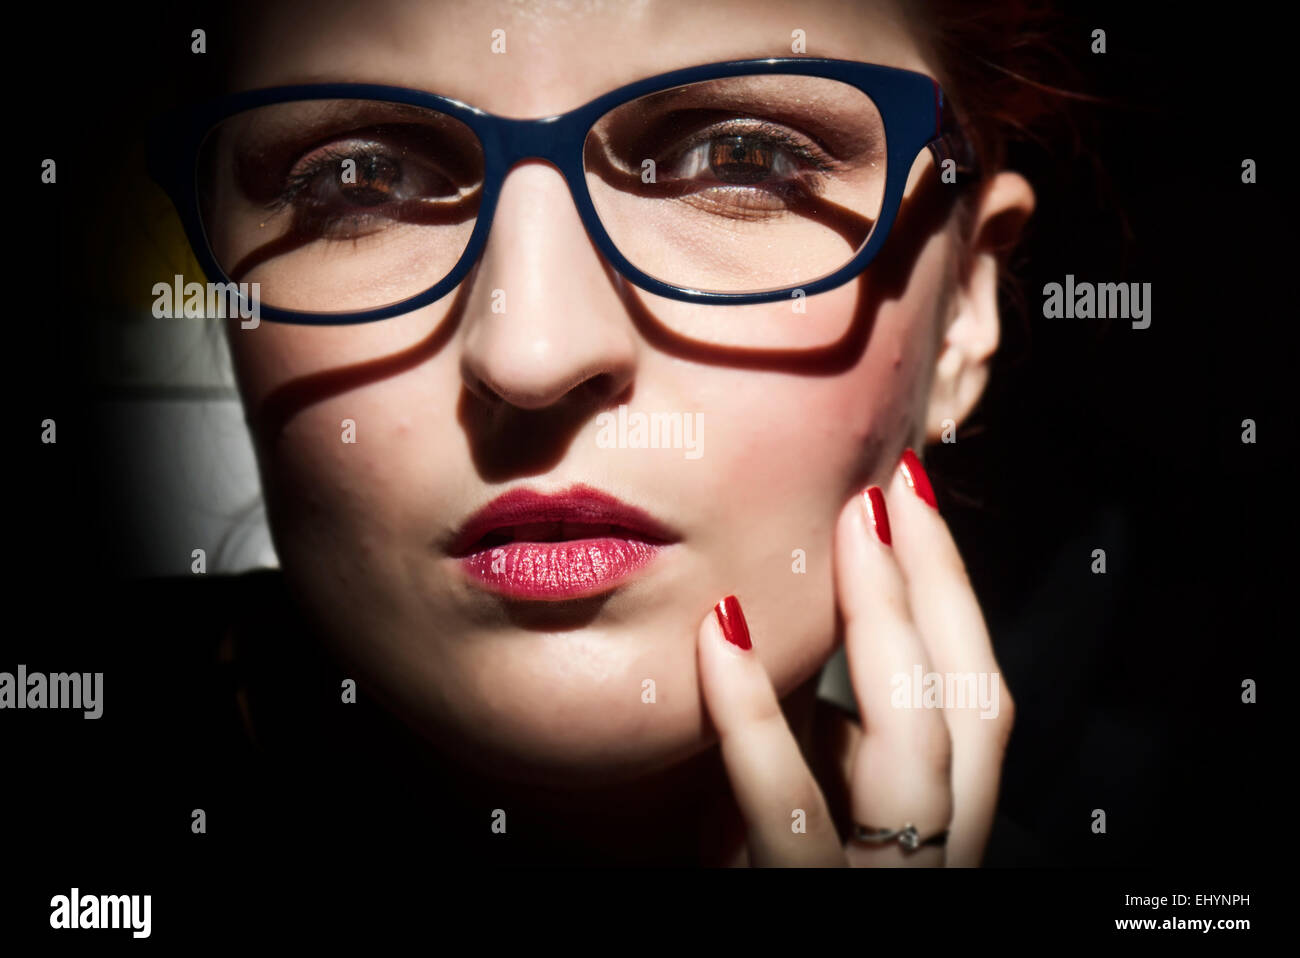 Portrait of a beautiful woman wearing glasses Stock Photo